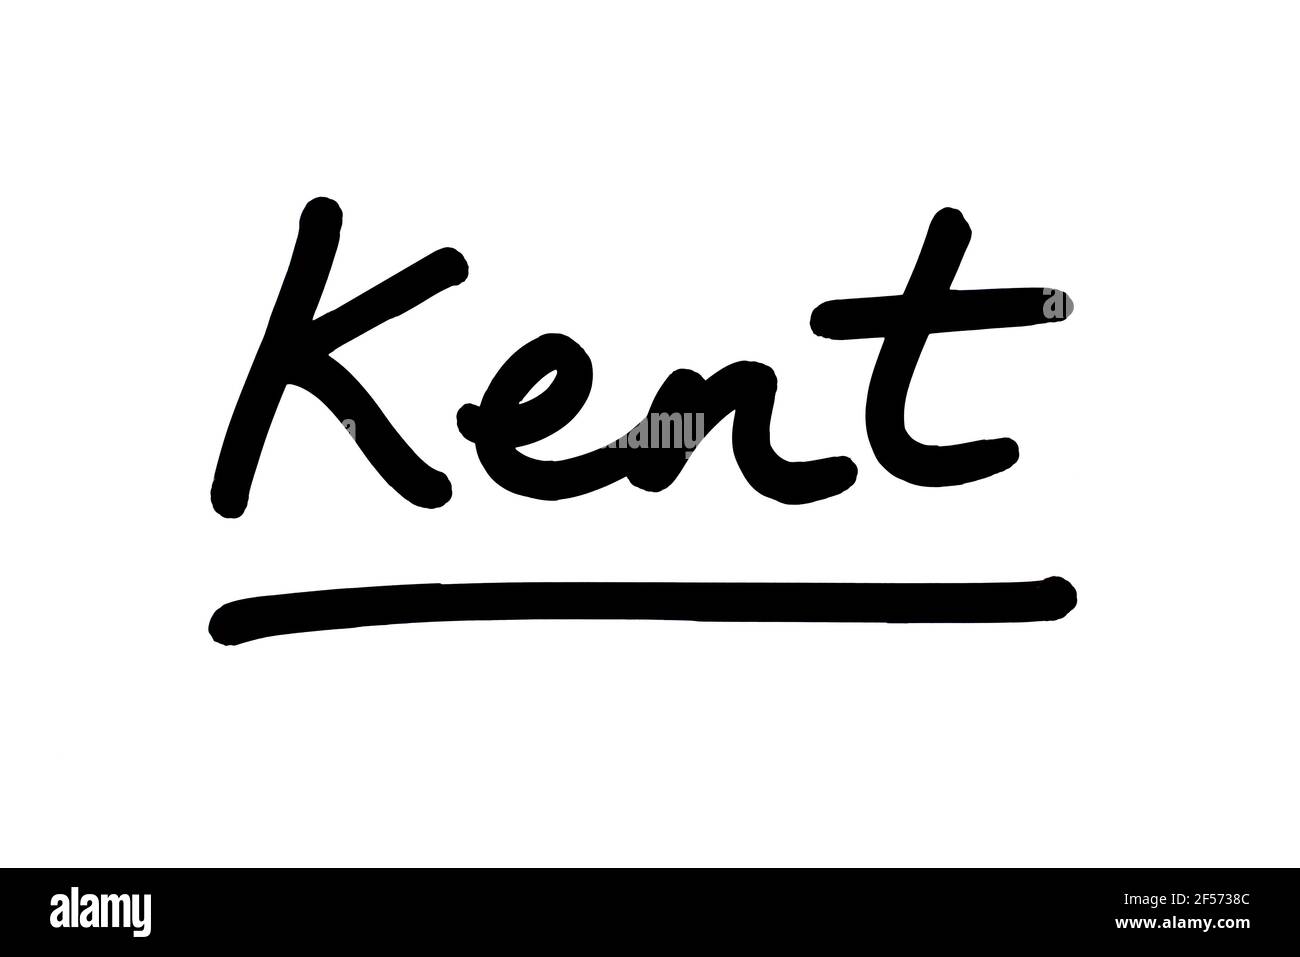 Kent, handwritten on a white background. Stock Photo